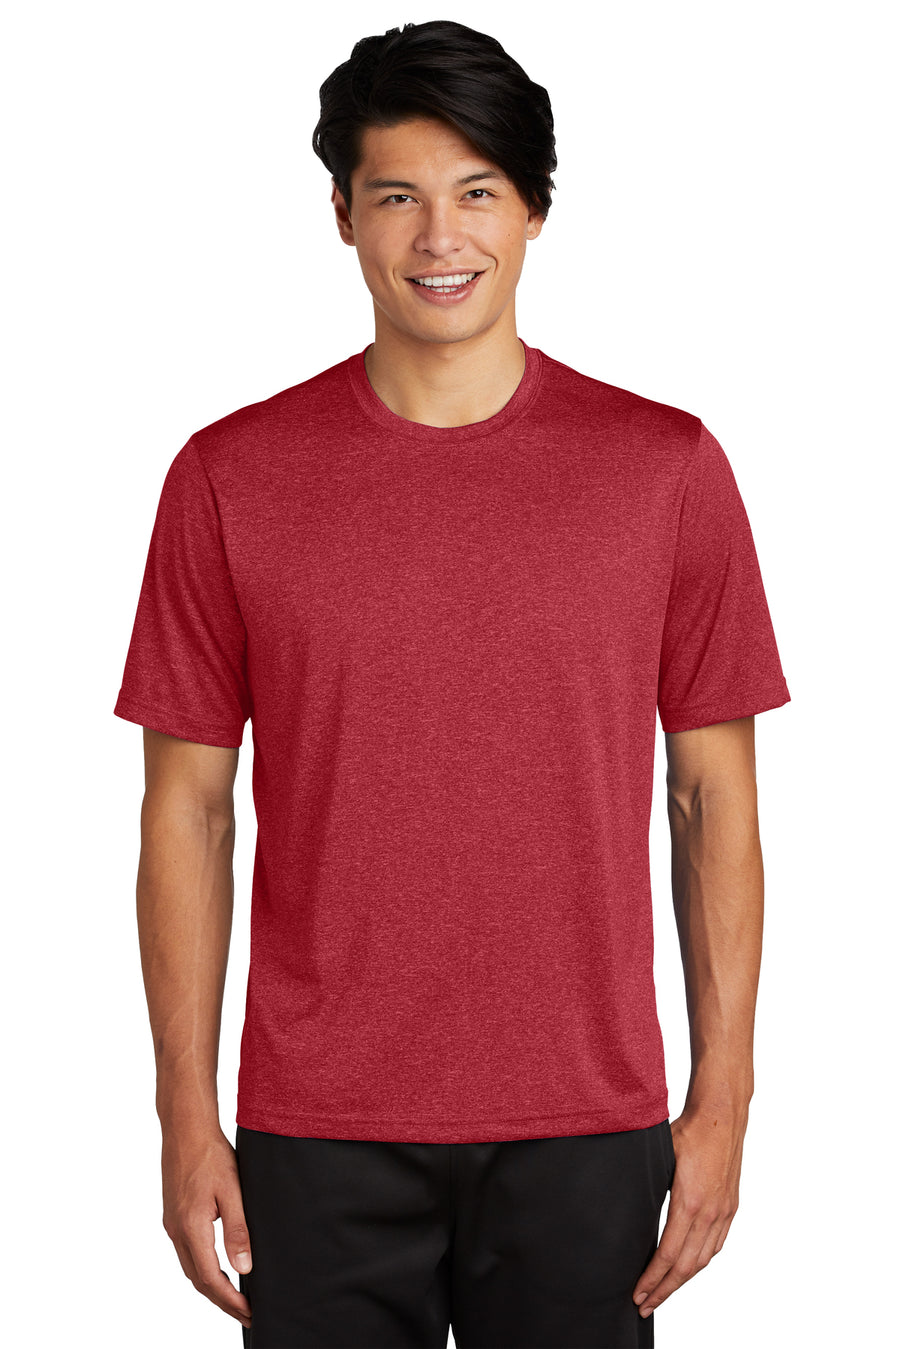 Men's Microfiber Heather T-Shirt (Short Sleeve)